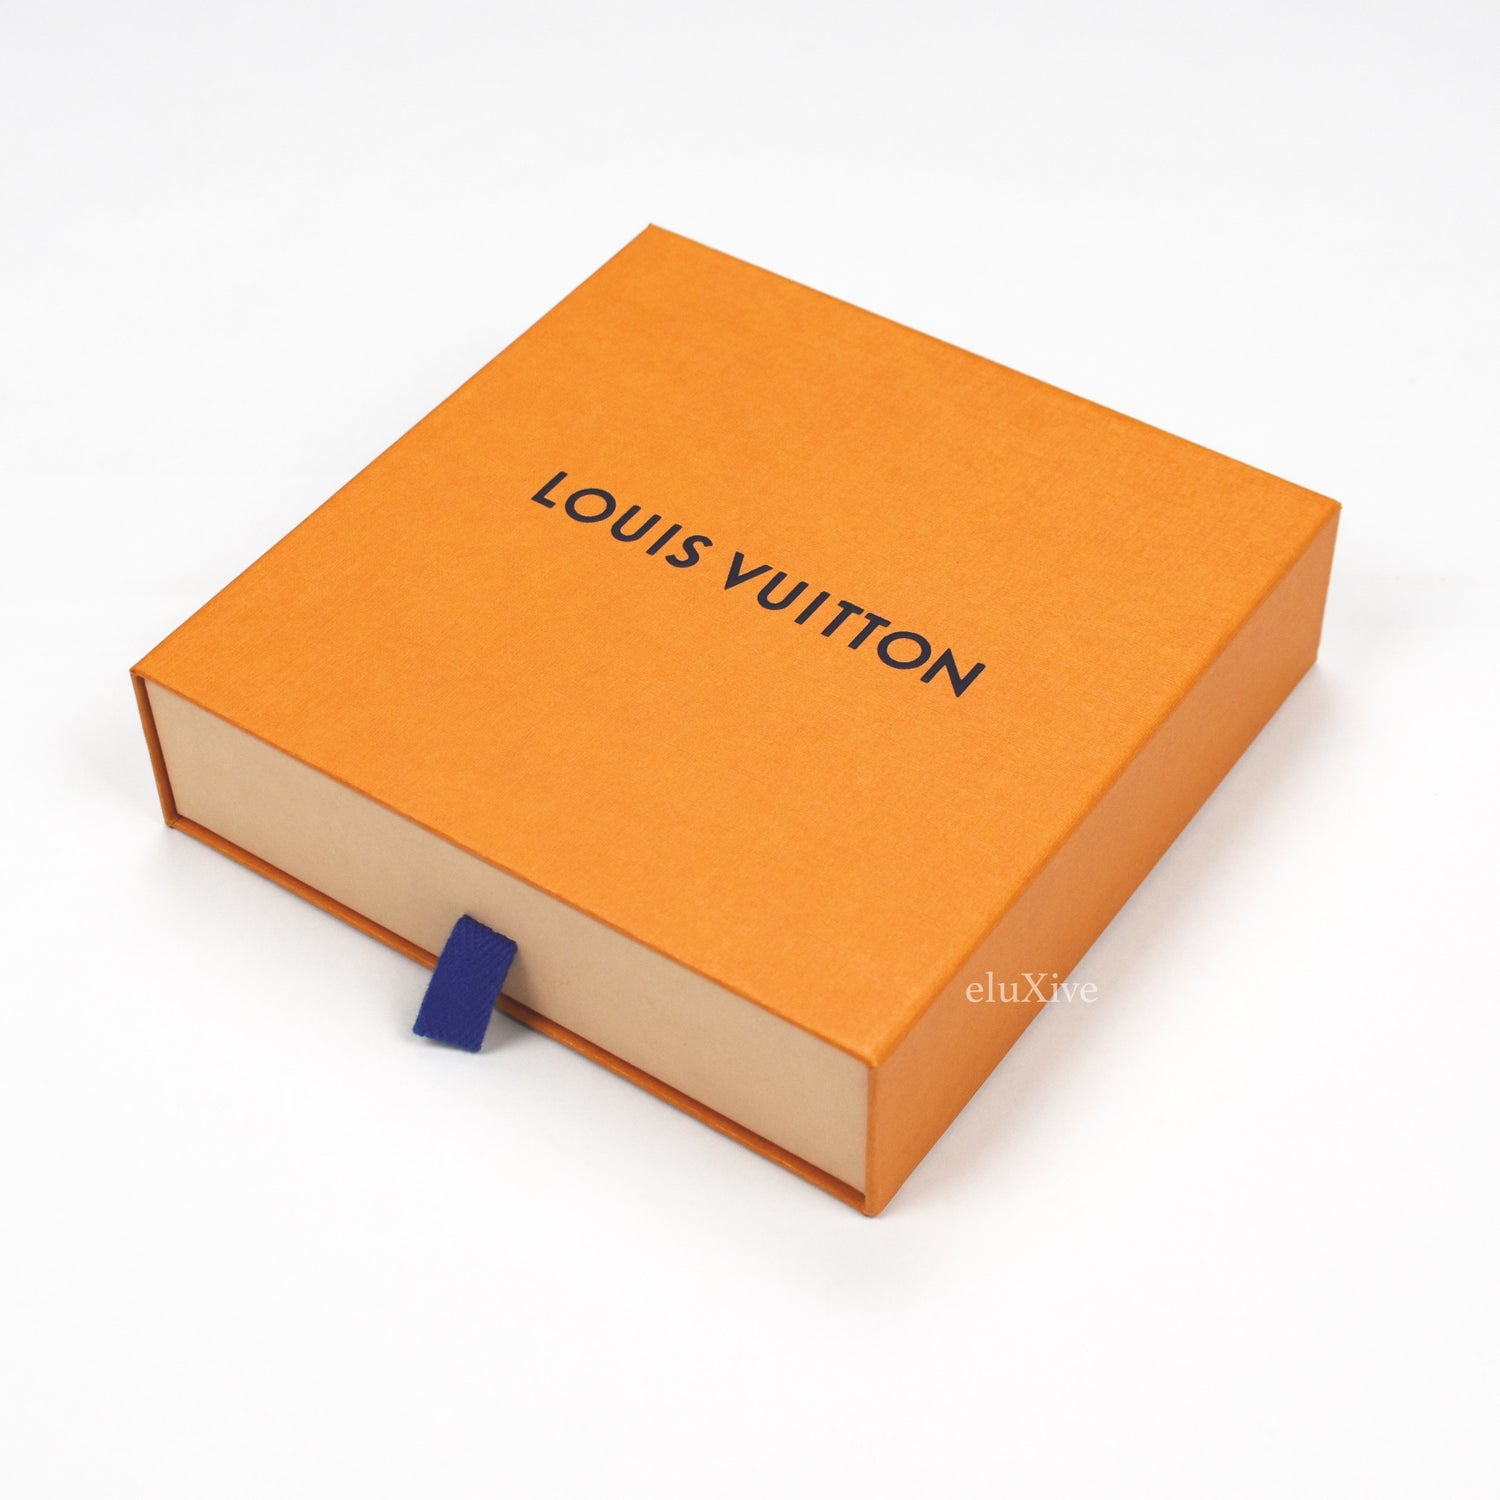 Louis Vuitton Cloud Wallet - For Sale on 1stDibs  louis vuitton cloud  collection, louis vuitton clouds wallet, lv wallet cloud